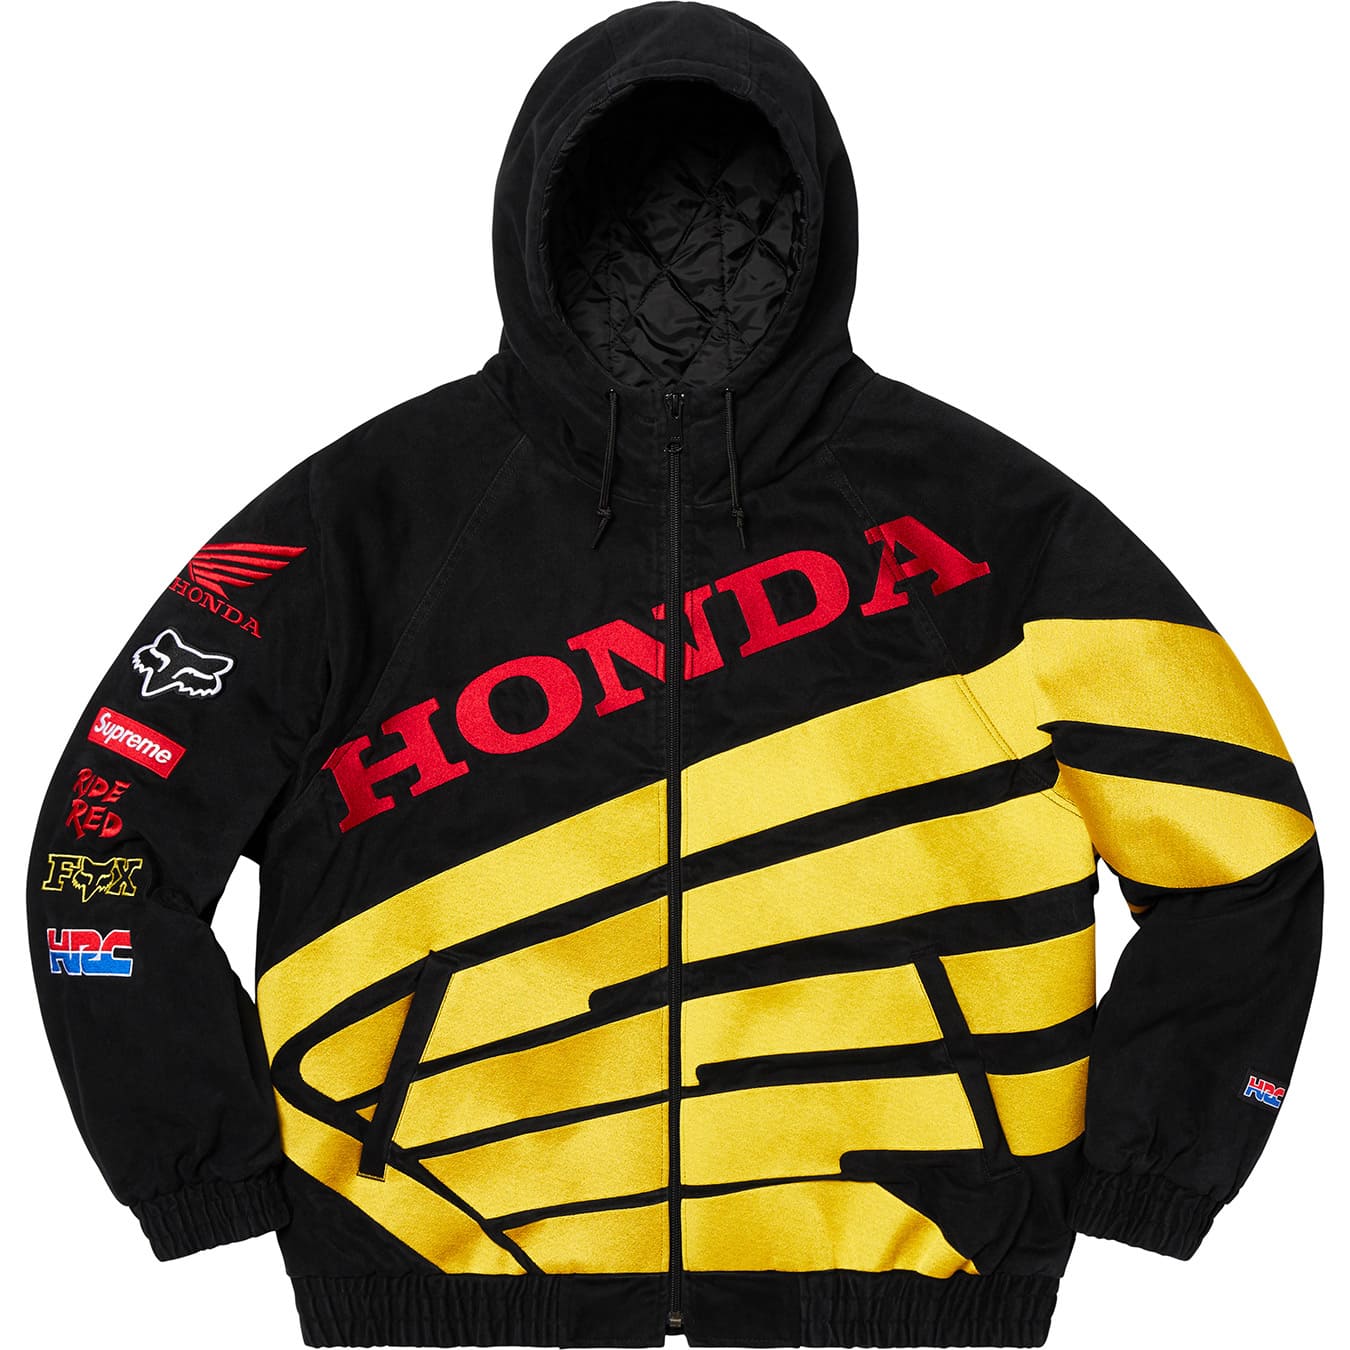 Supreme®/Honda®/Fox® Racing Puffy Zip Up Work Jacket